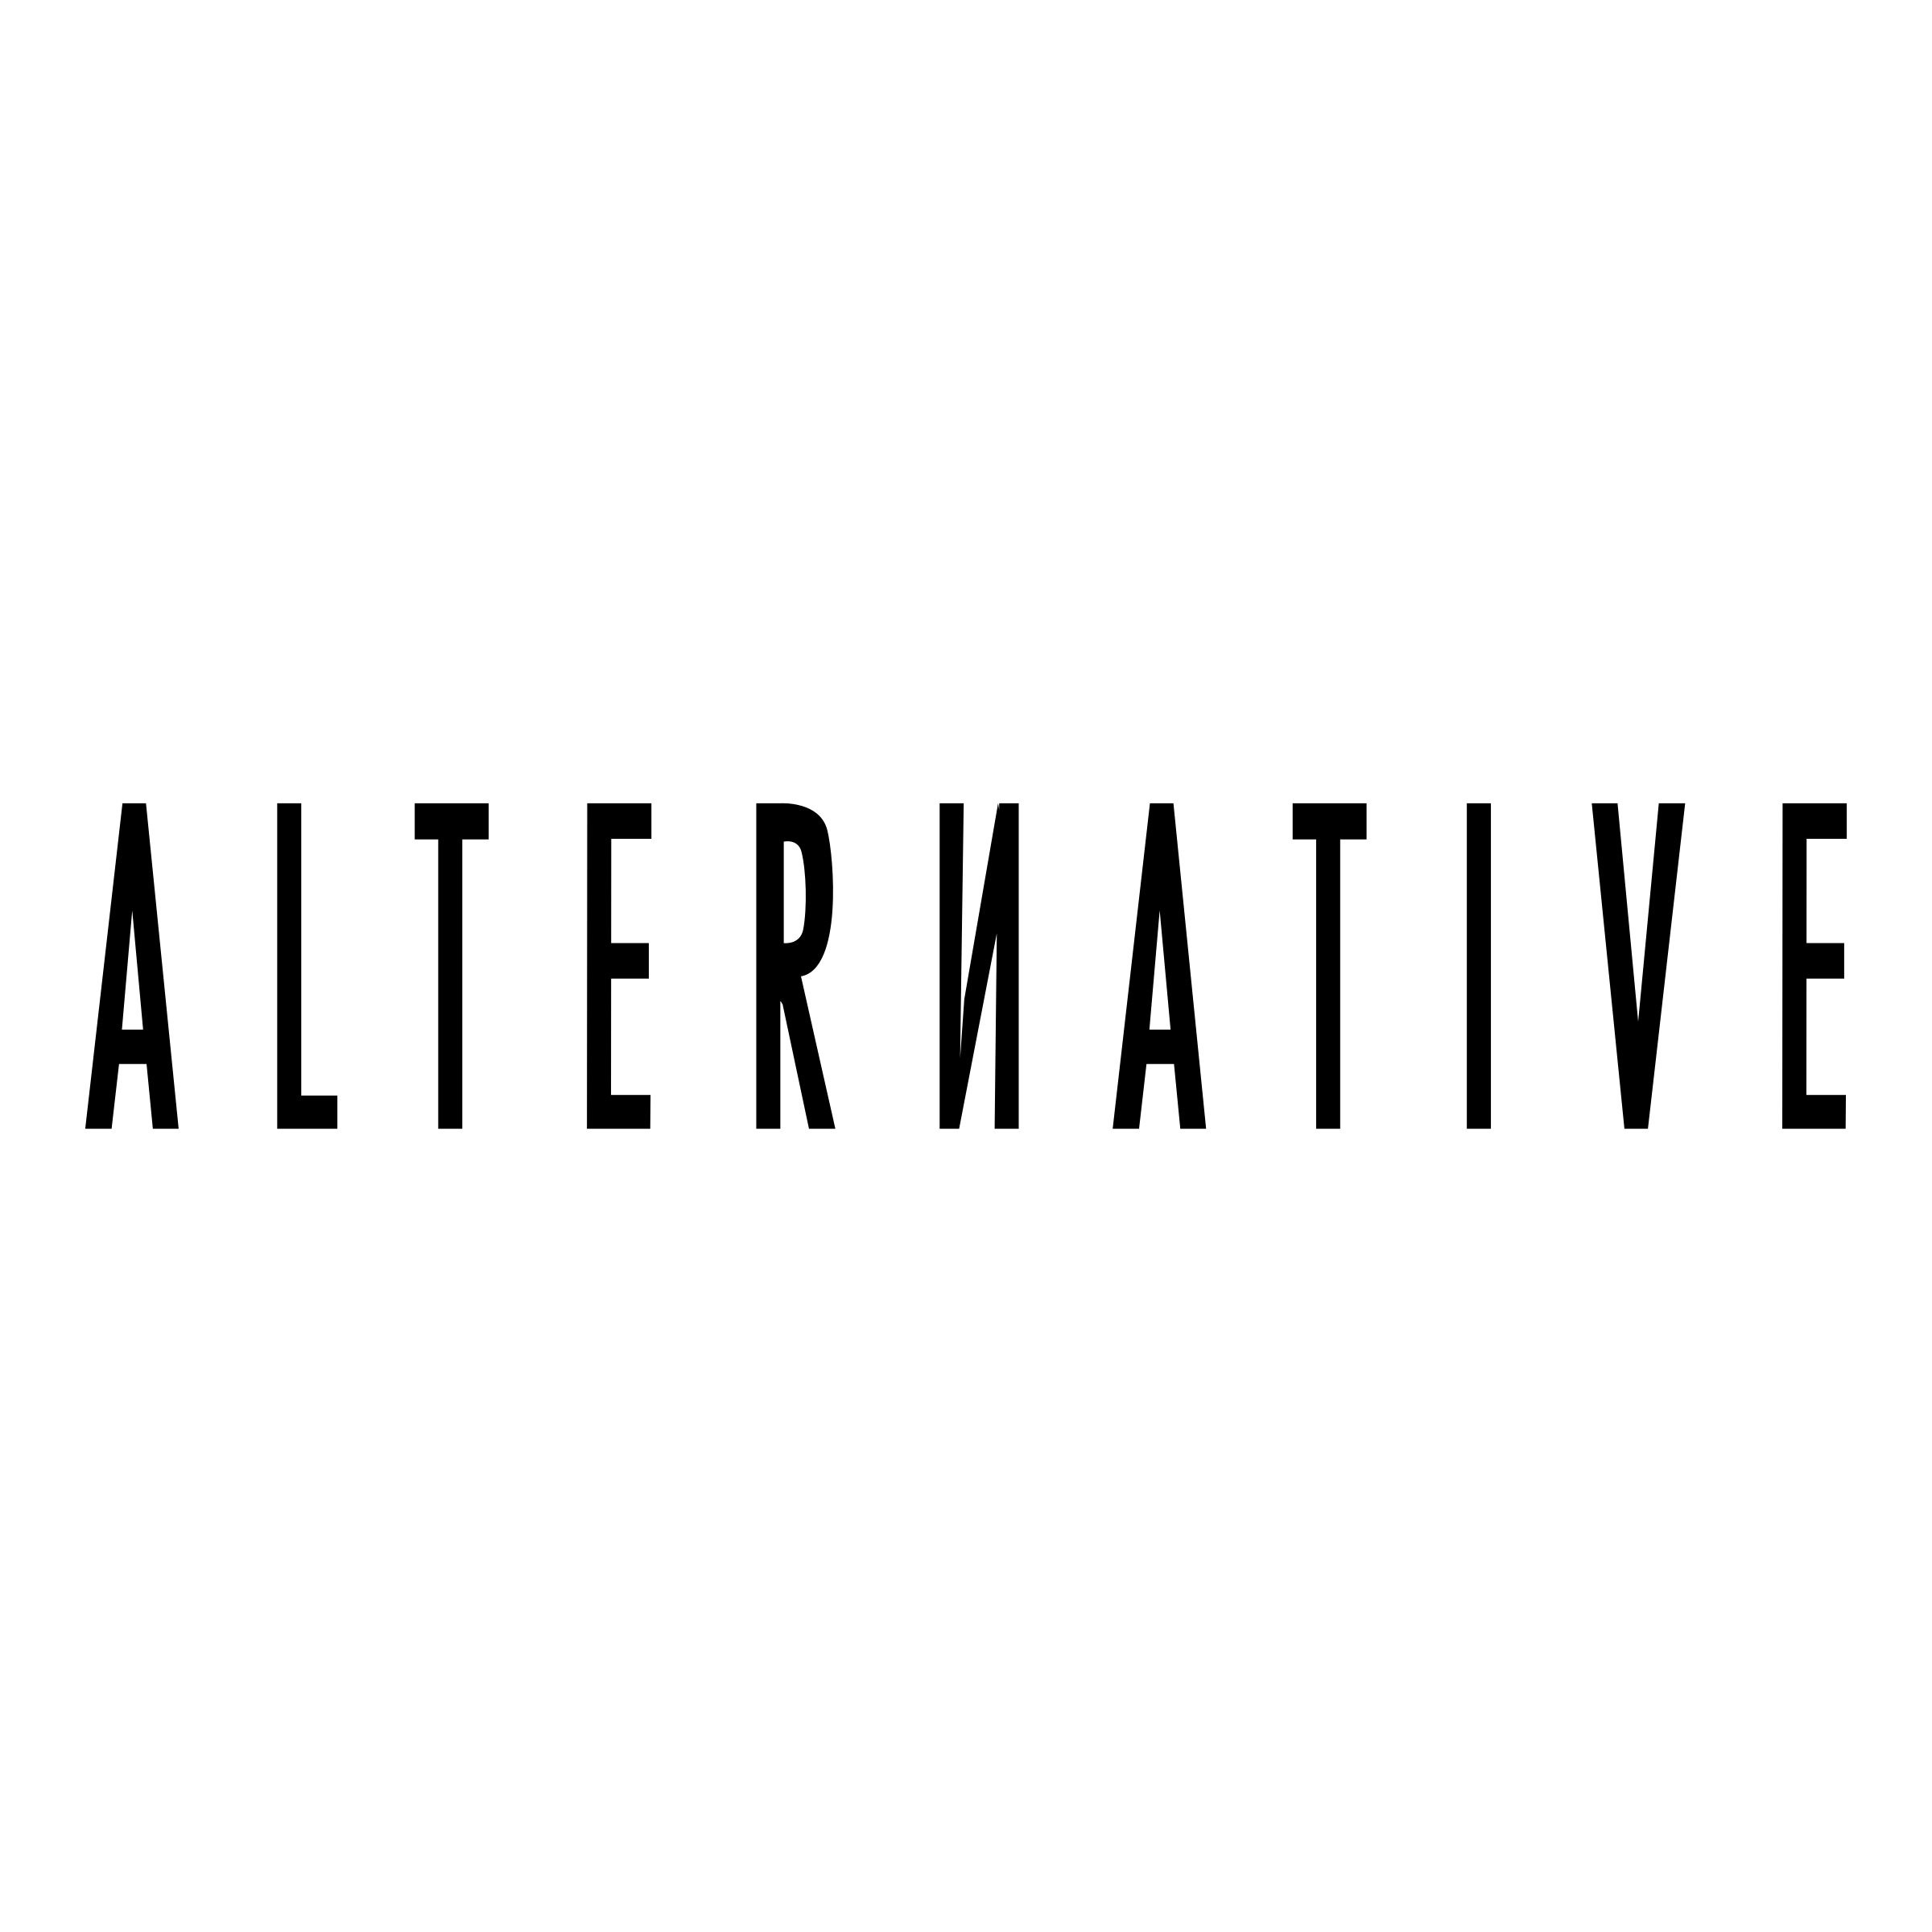 Alternative Logo - Alternative Logo PNG Transparent & SVG Vector